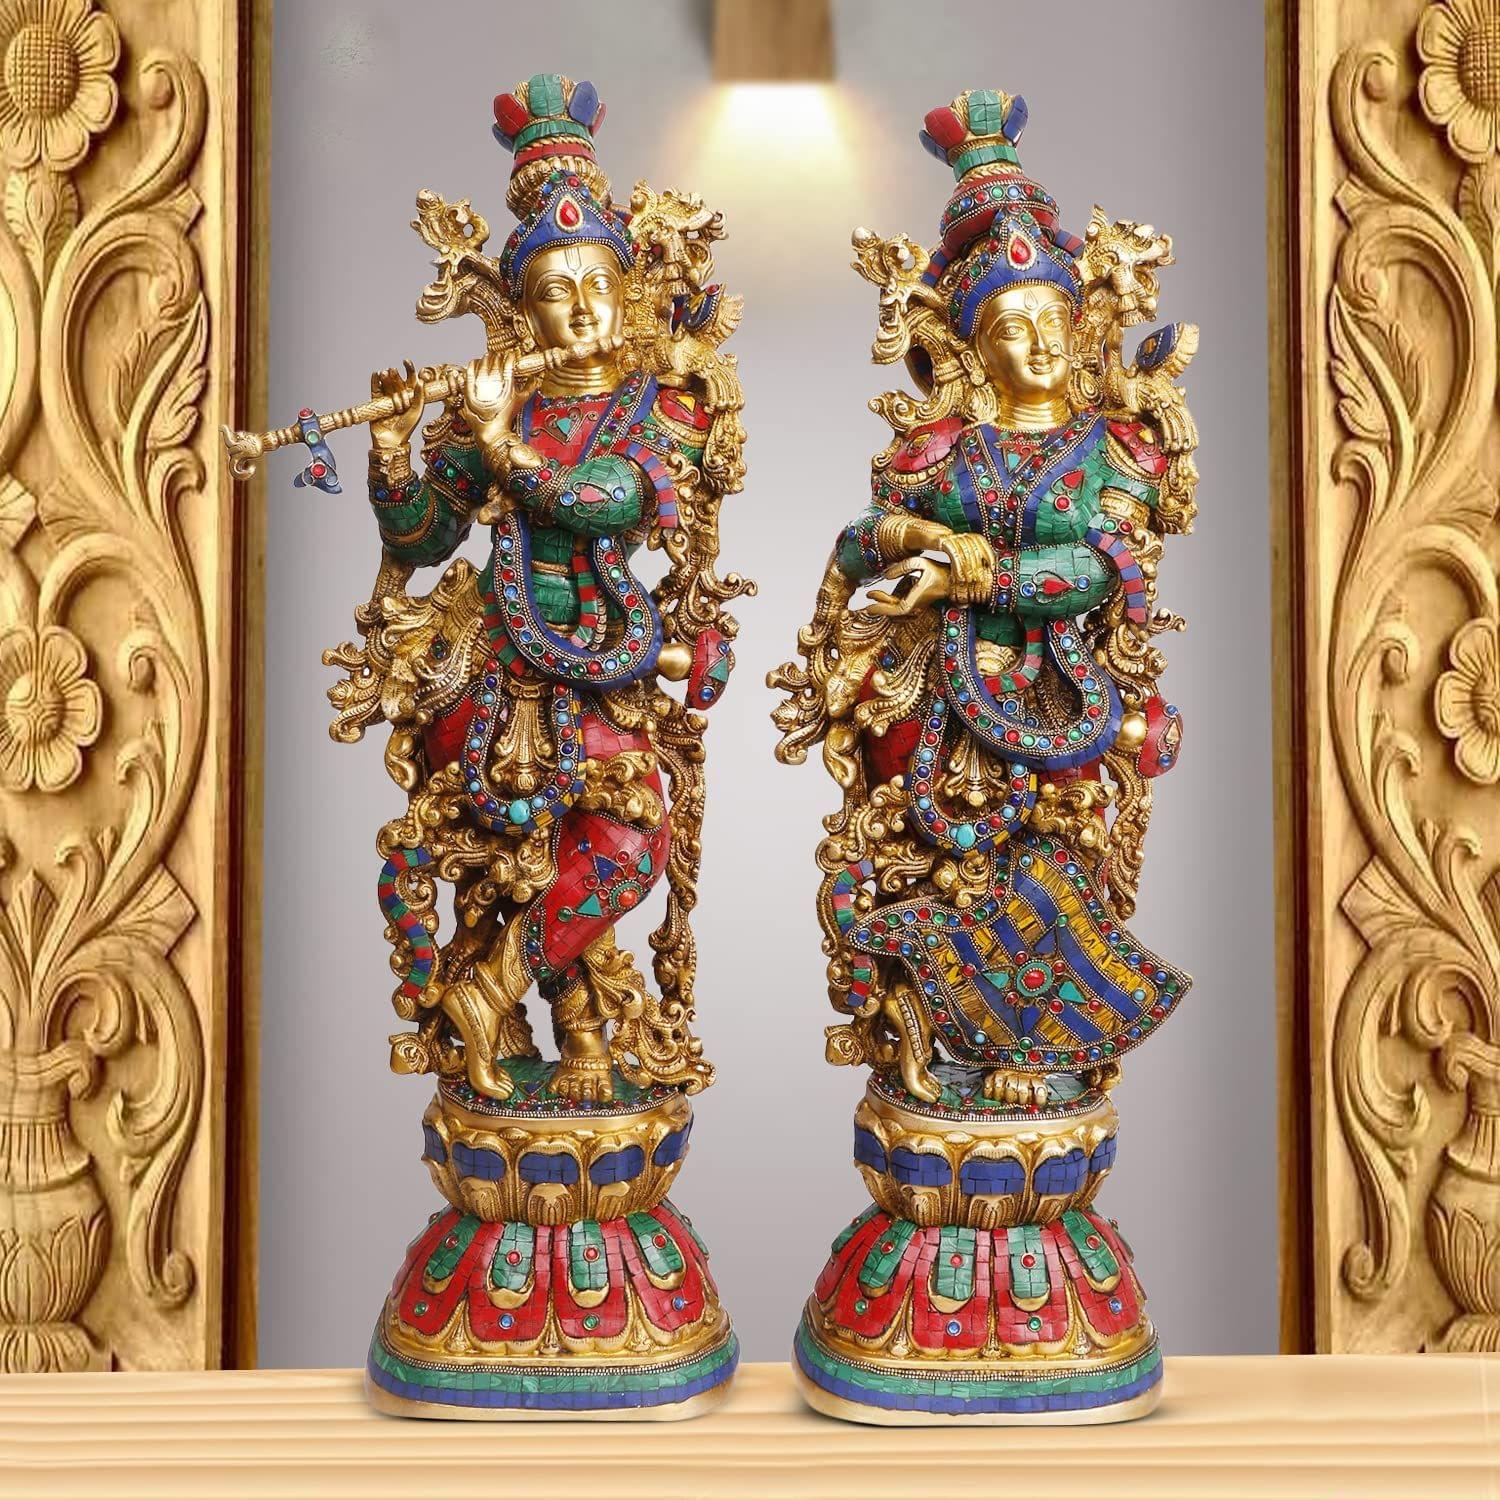 GOLDGIFTIDEAS 999 Silver Plated Radha Krishna Idol with Cabinet, Wedding  Return Gift, Resin Radha Shyam Statue for Pooja